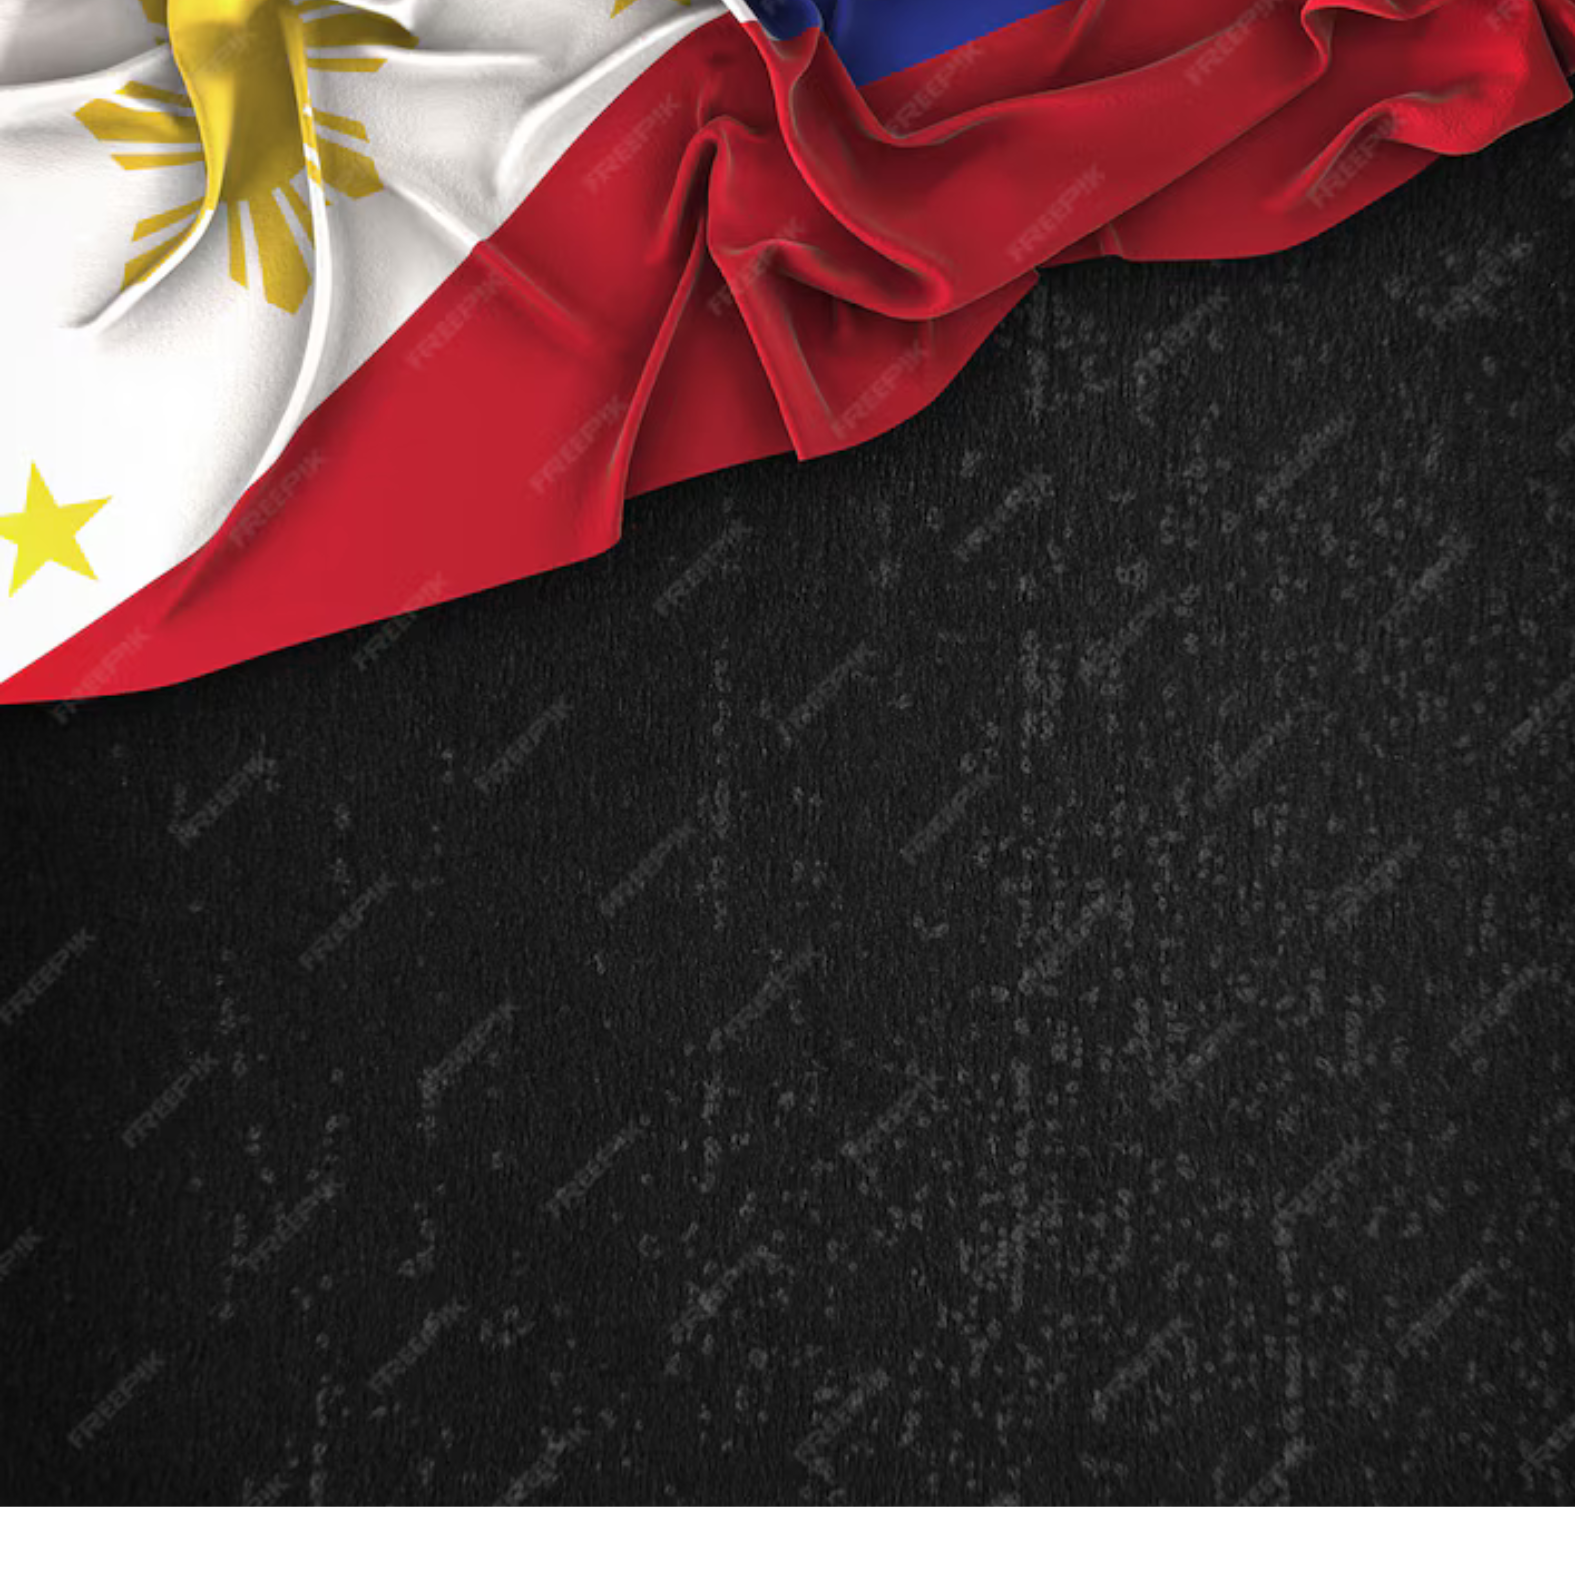 The Philippine Flag